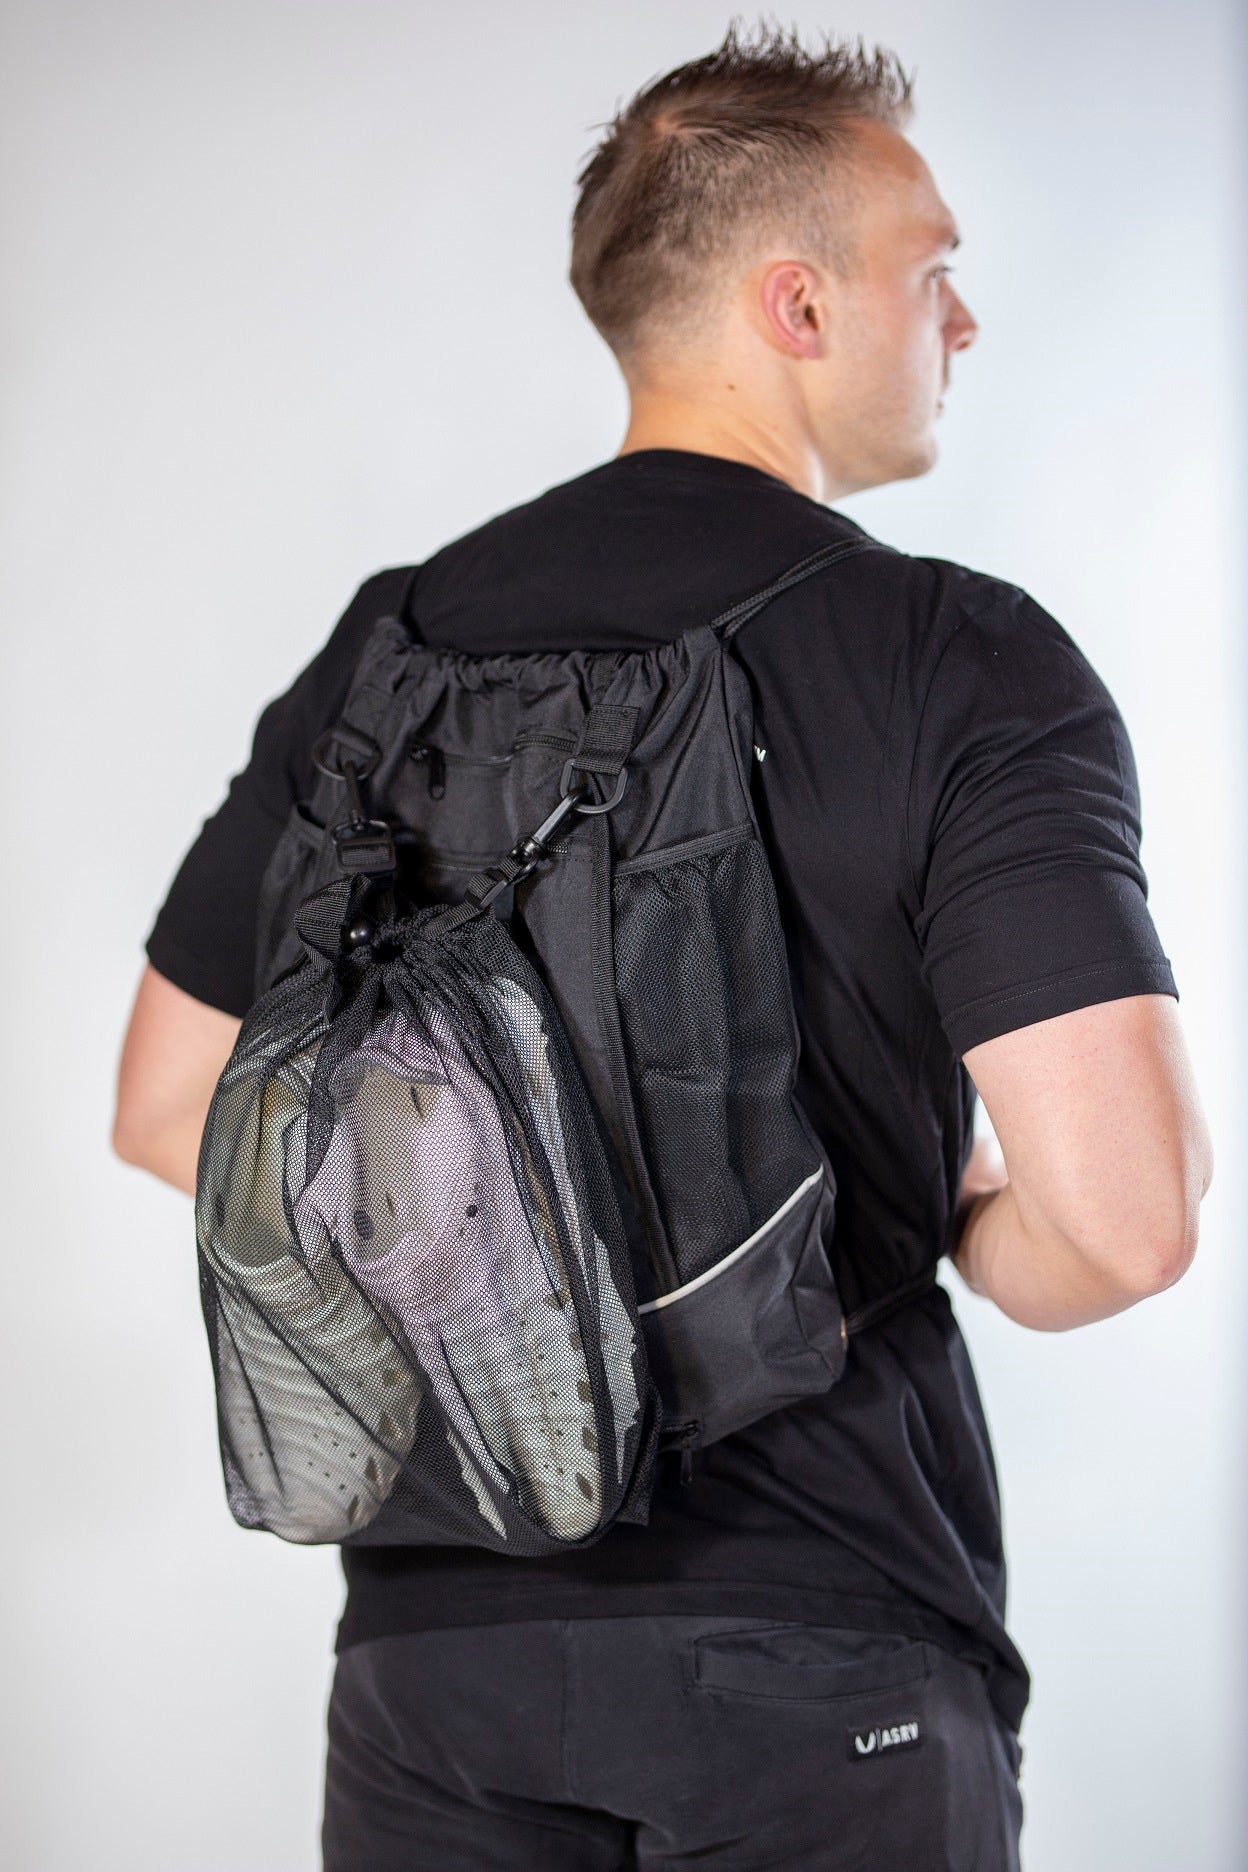 Drawstring Backpack with Mesh Drying Bag